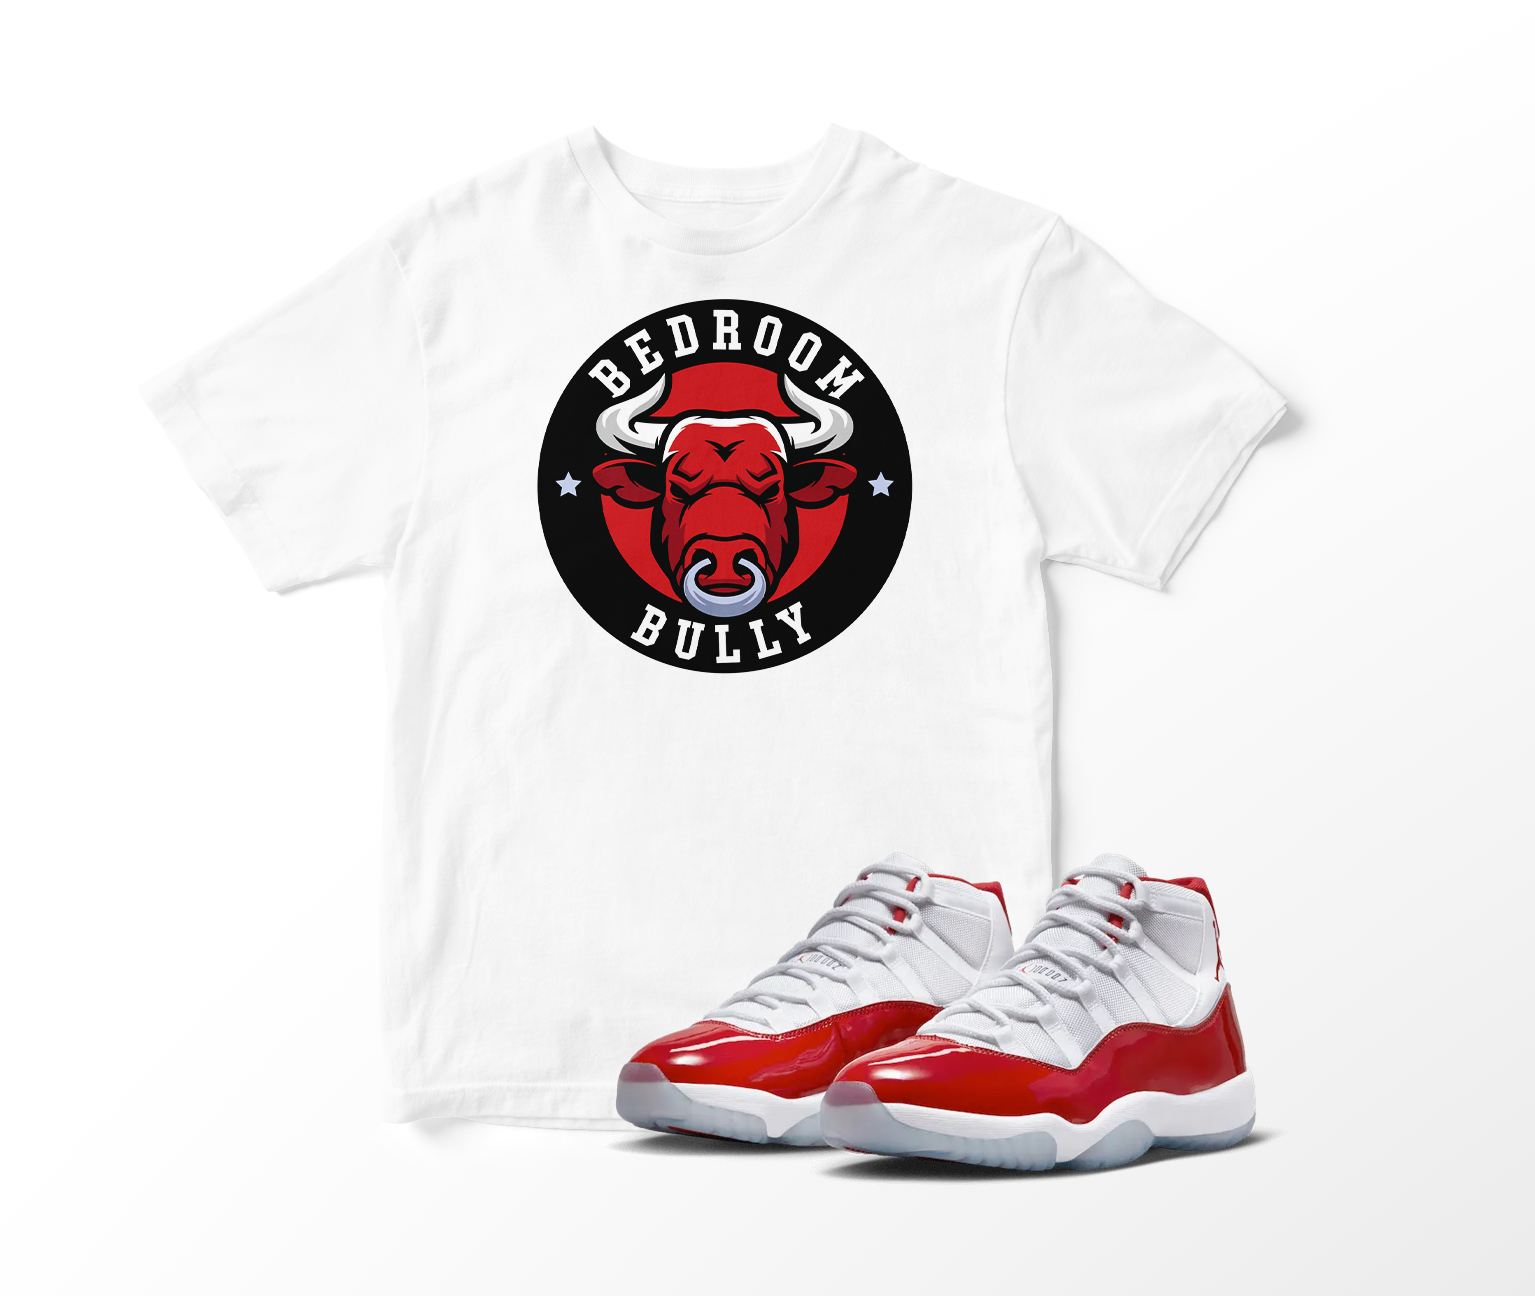 'Bedroom Bully' Custom Graphic Short Sleeve T-Shirt To Match Air Jordan 11 Cherry Red